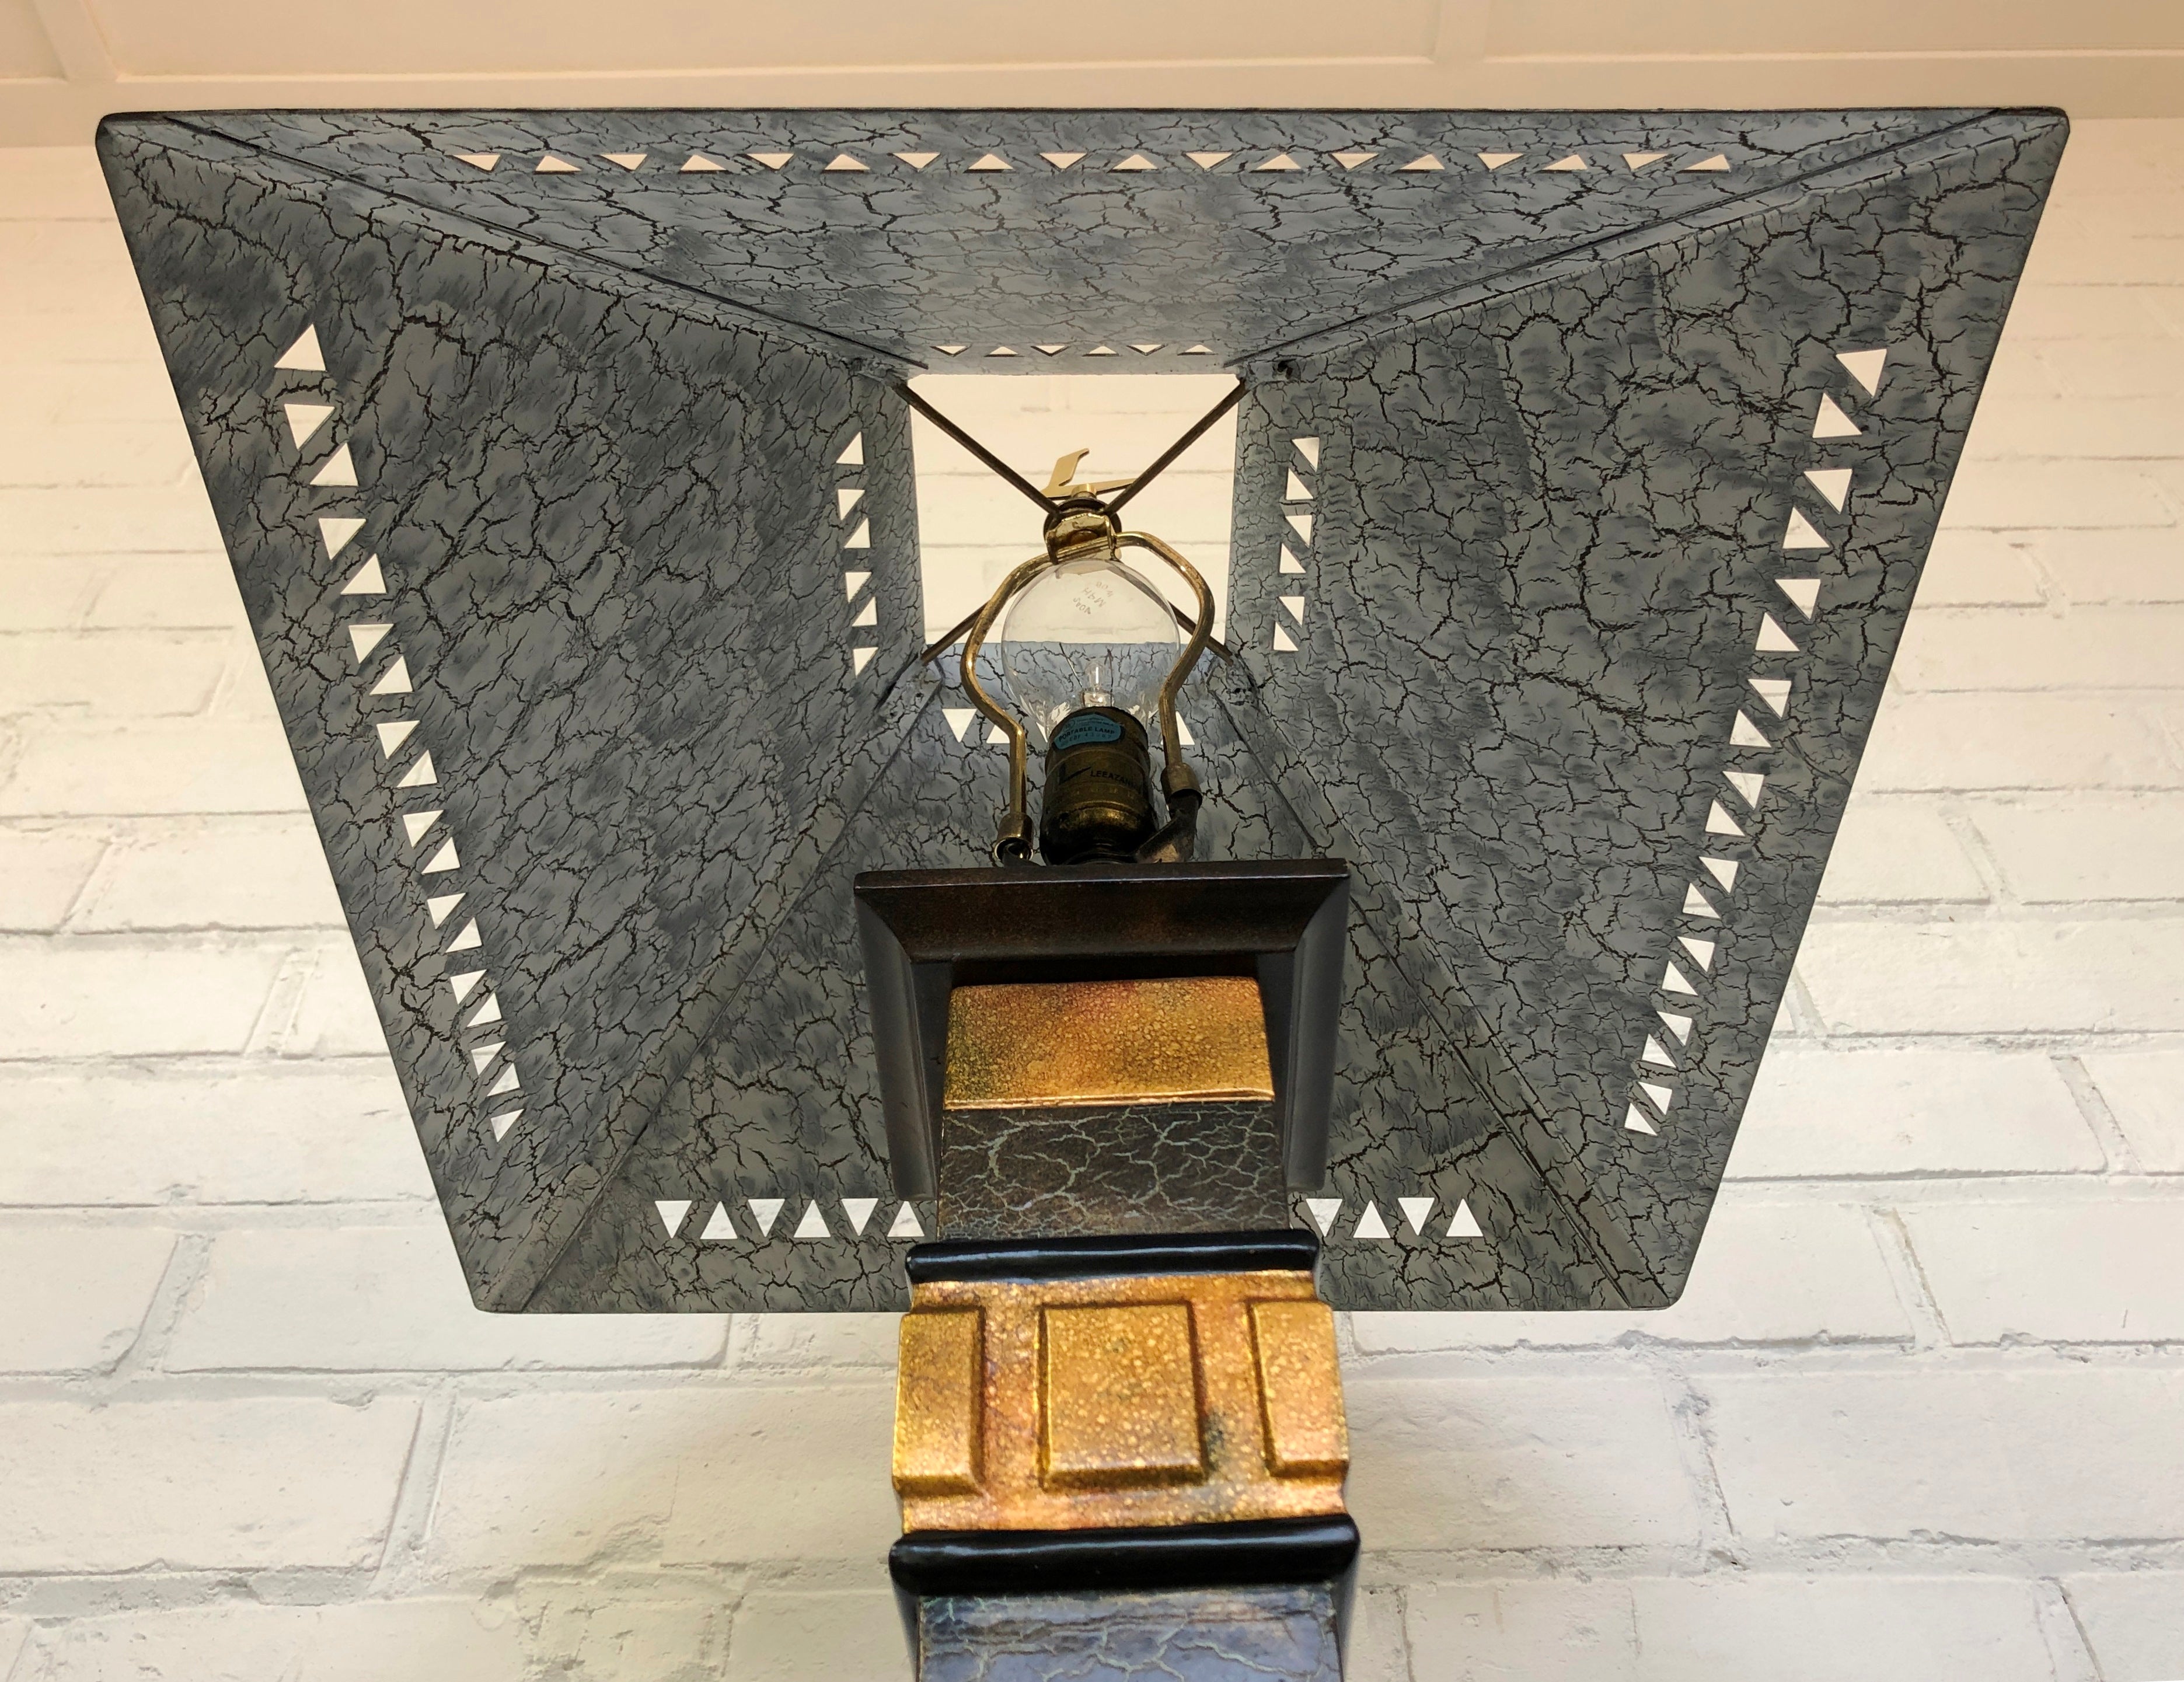 Vintage Empire Style Pedestal Floor Lamp | eXibit collection